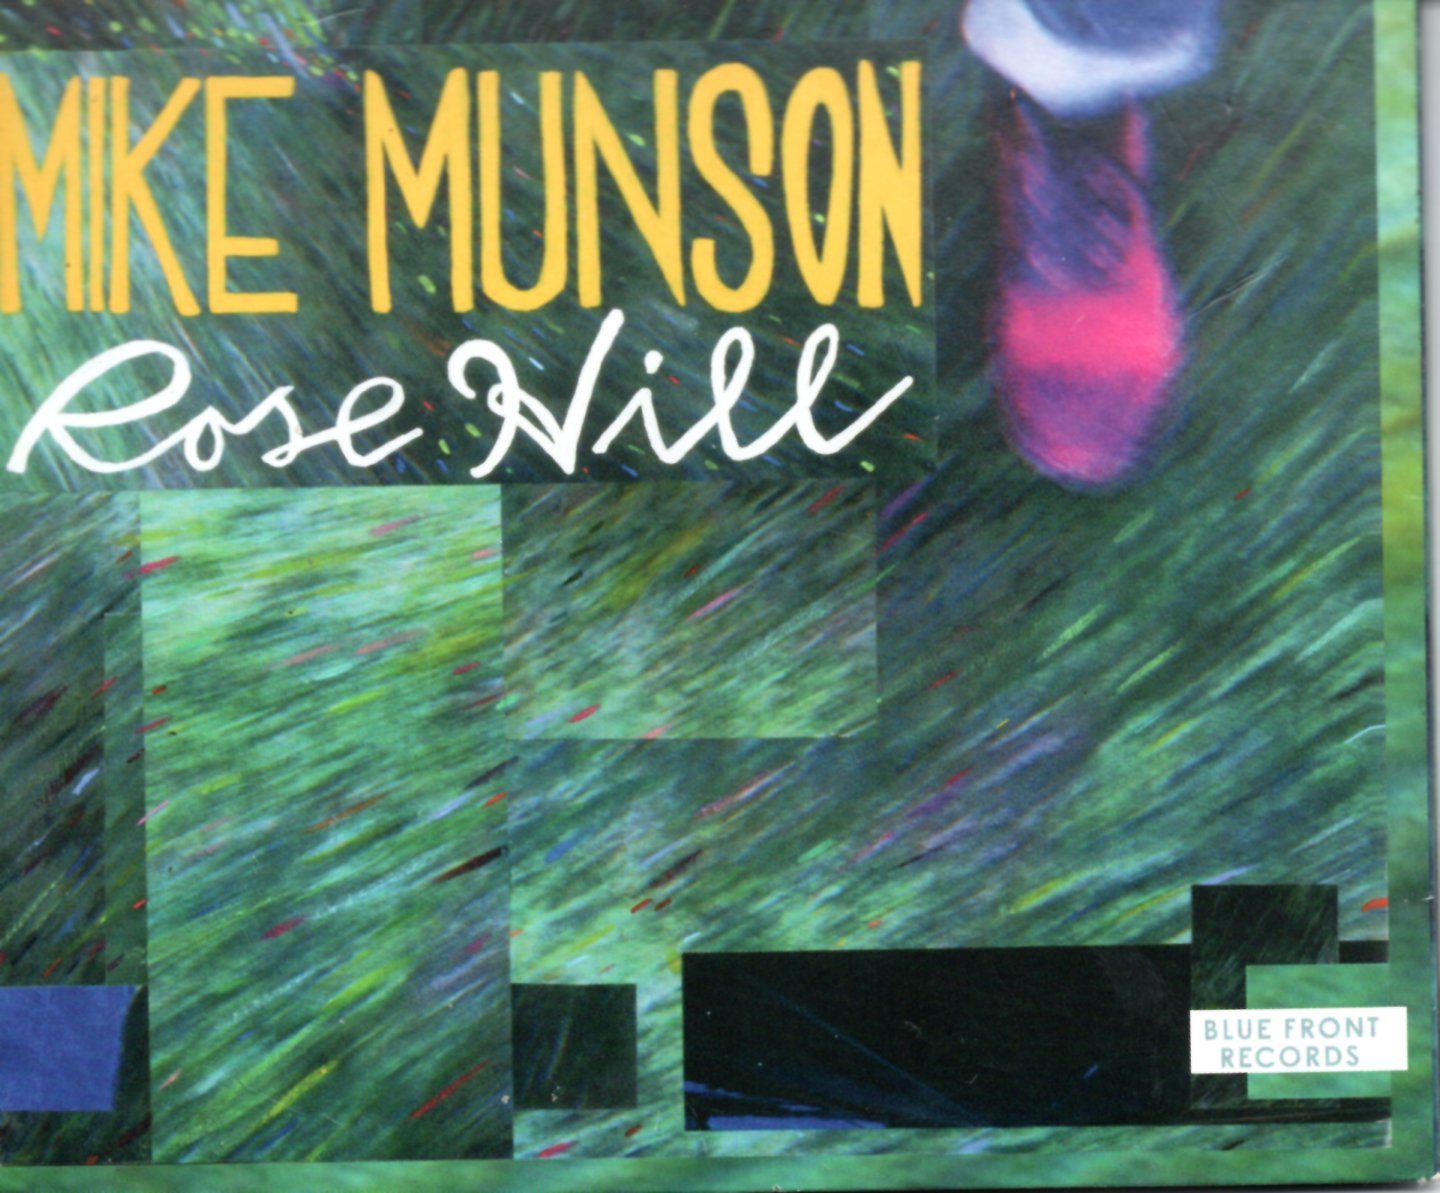 Mike Munson: Rose Hill